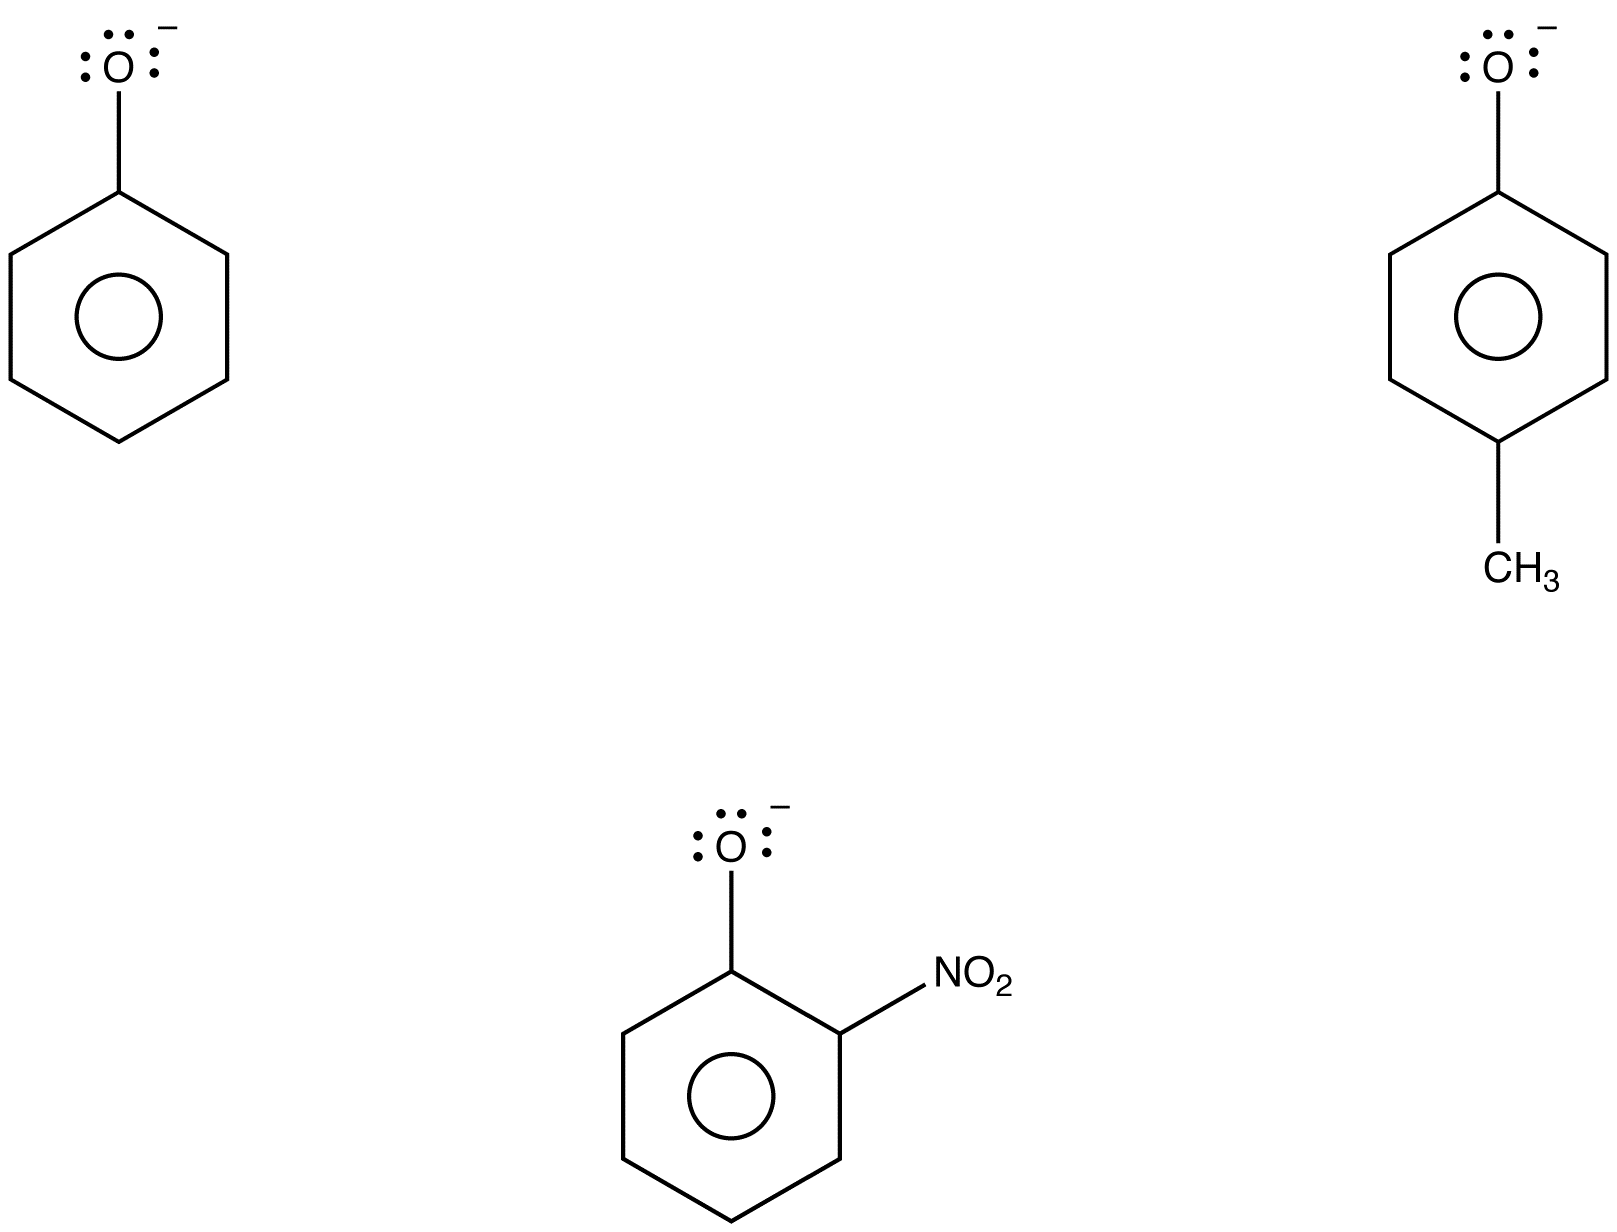 phenoxideion2.png